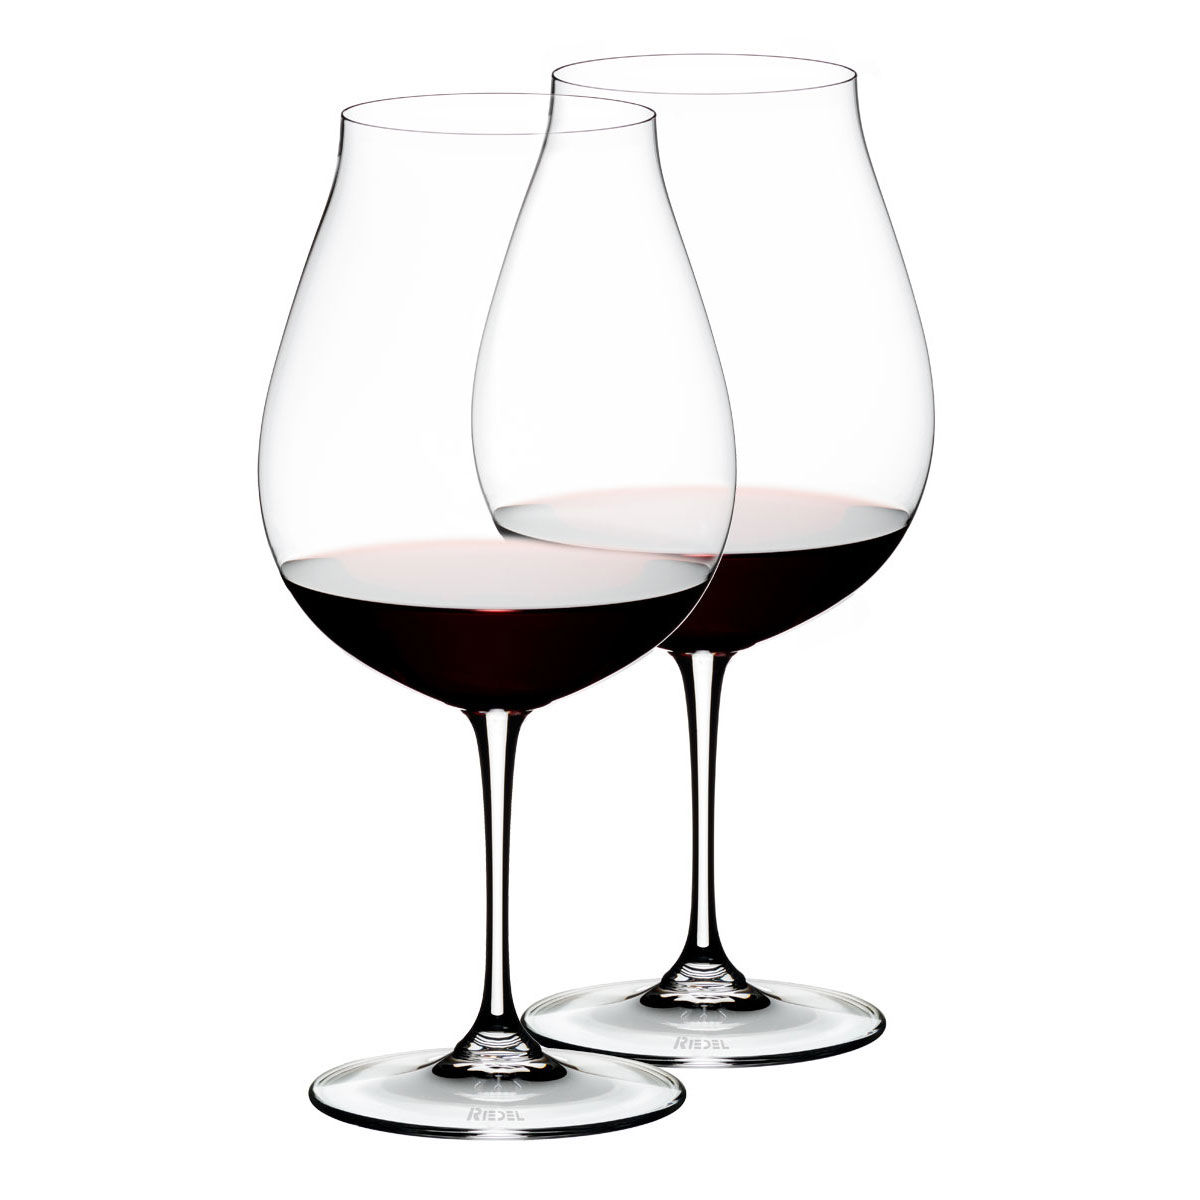 Vaso de cristal con textoPay 3 Get 4 5416/67-1 Riedel Vinum New World Pinot Noir